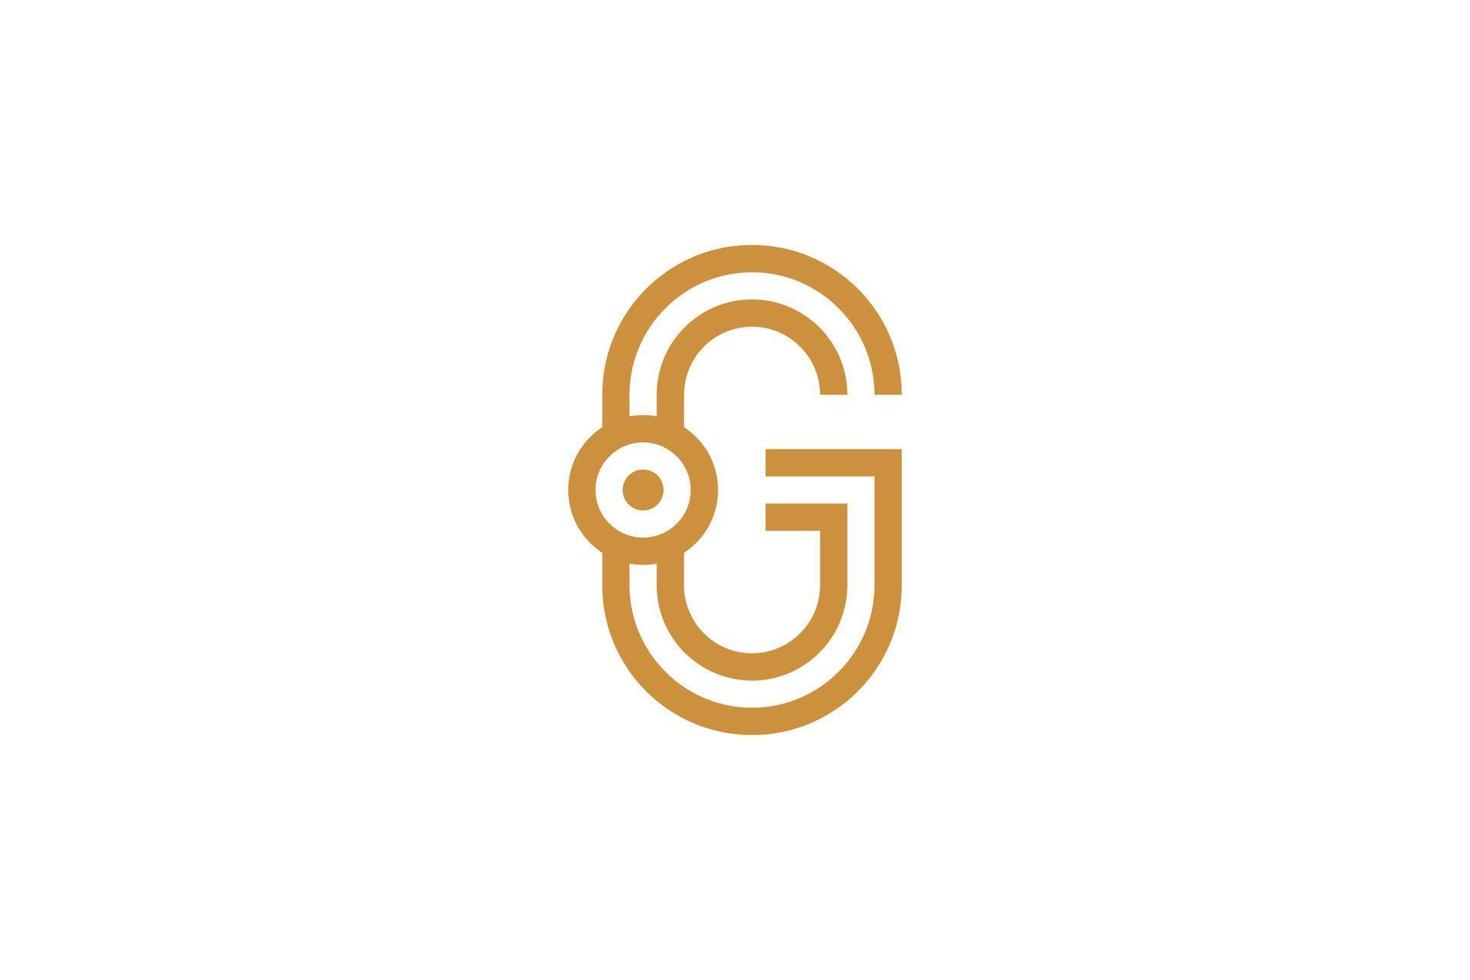 modelos criativos de logotipos da letra g vetor